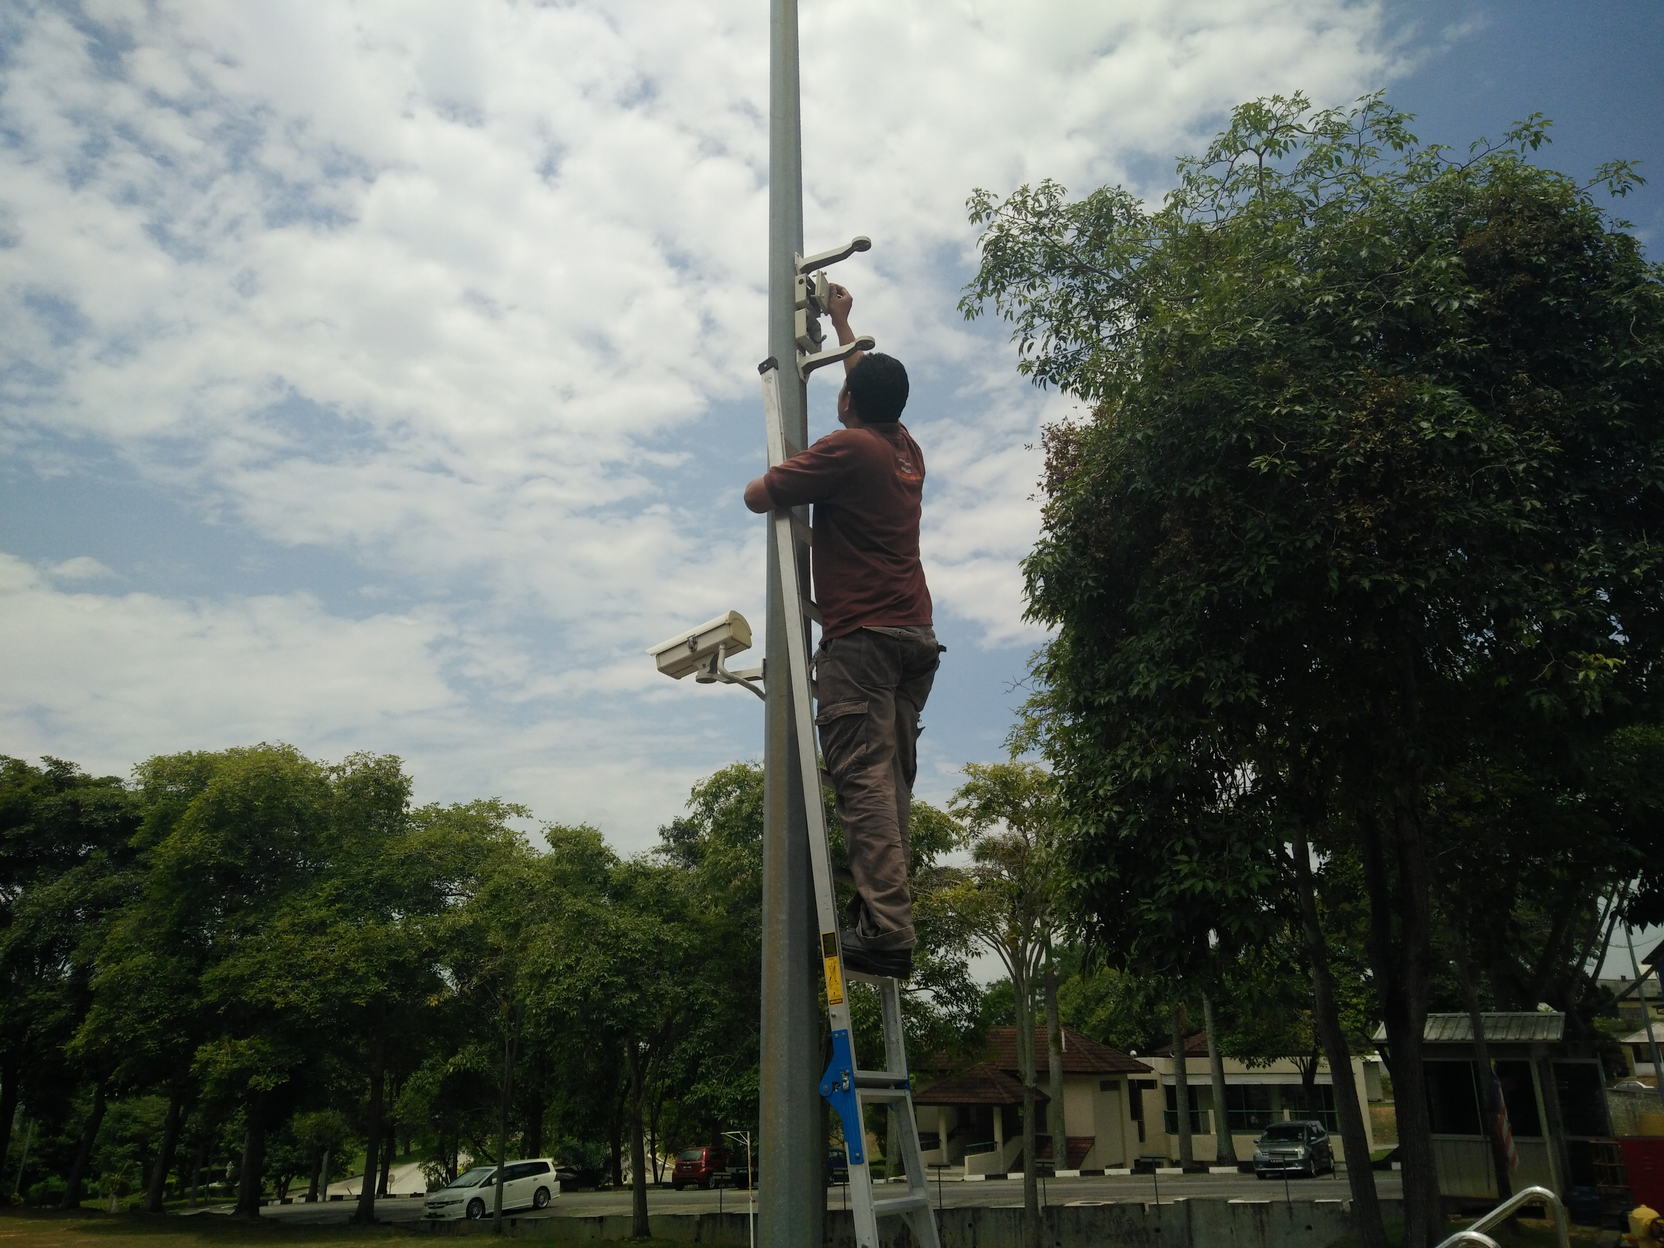 working on a cctv pole - maintenance job